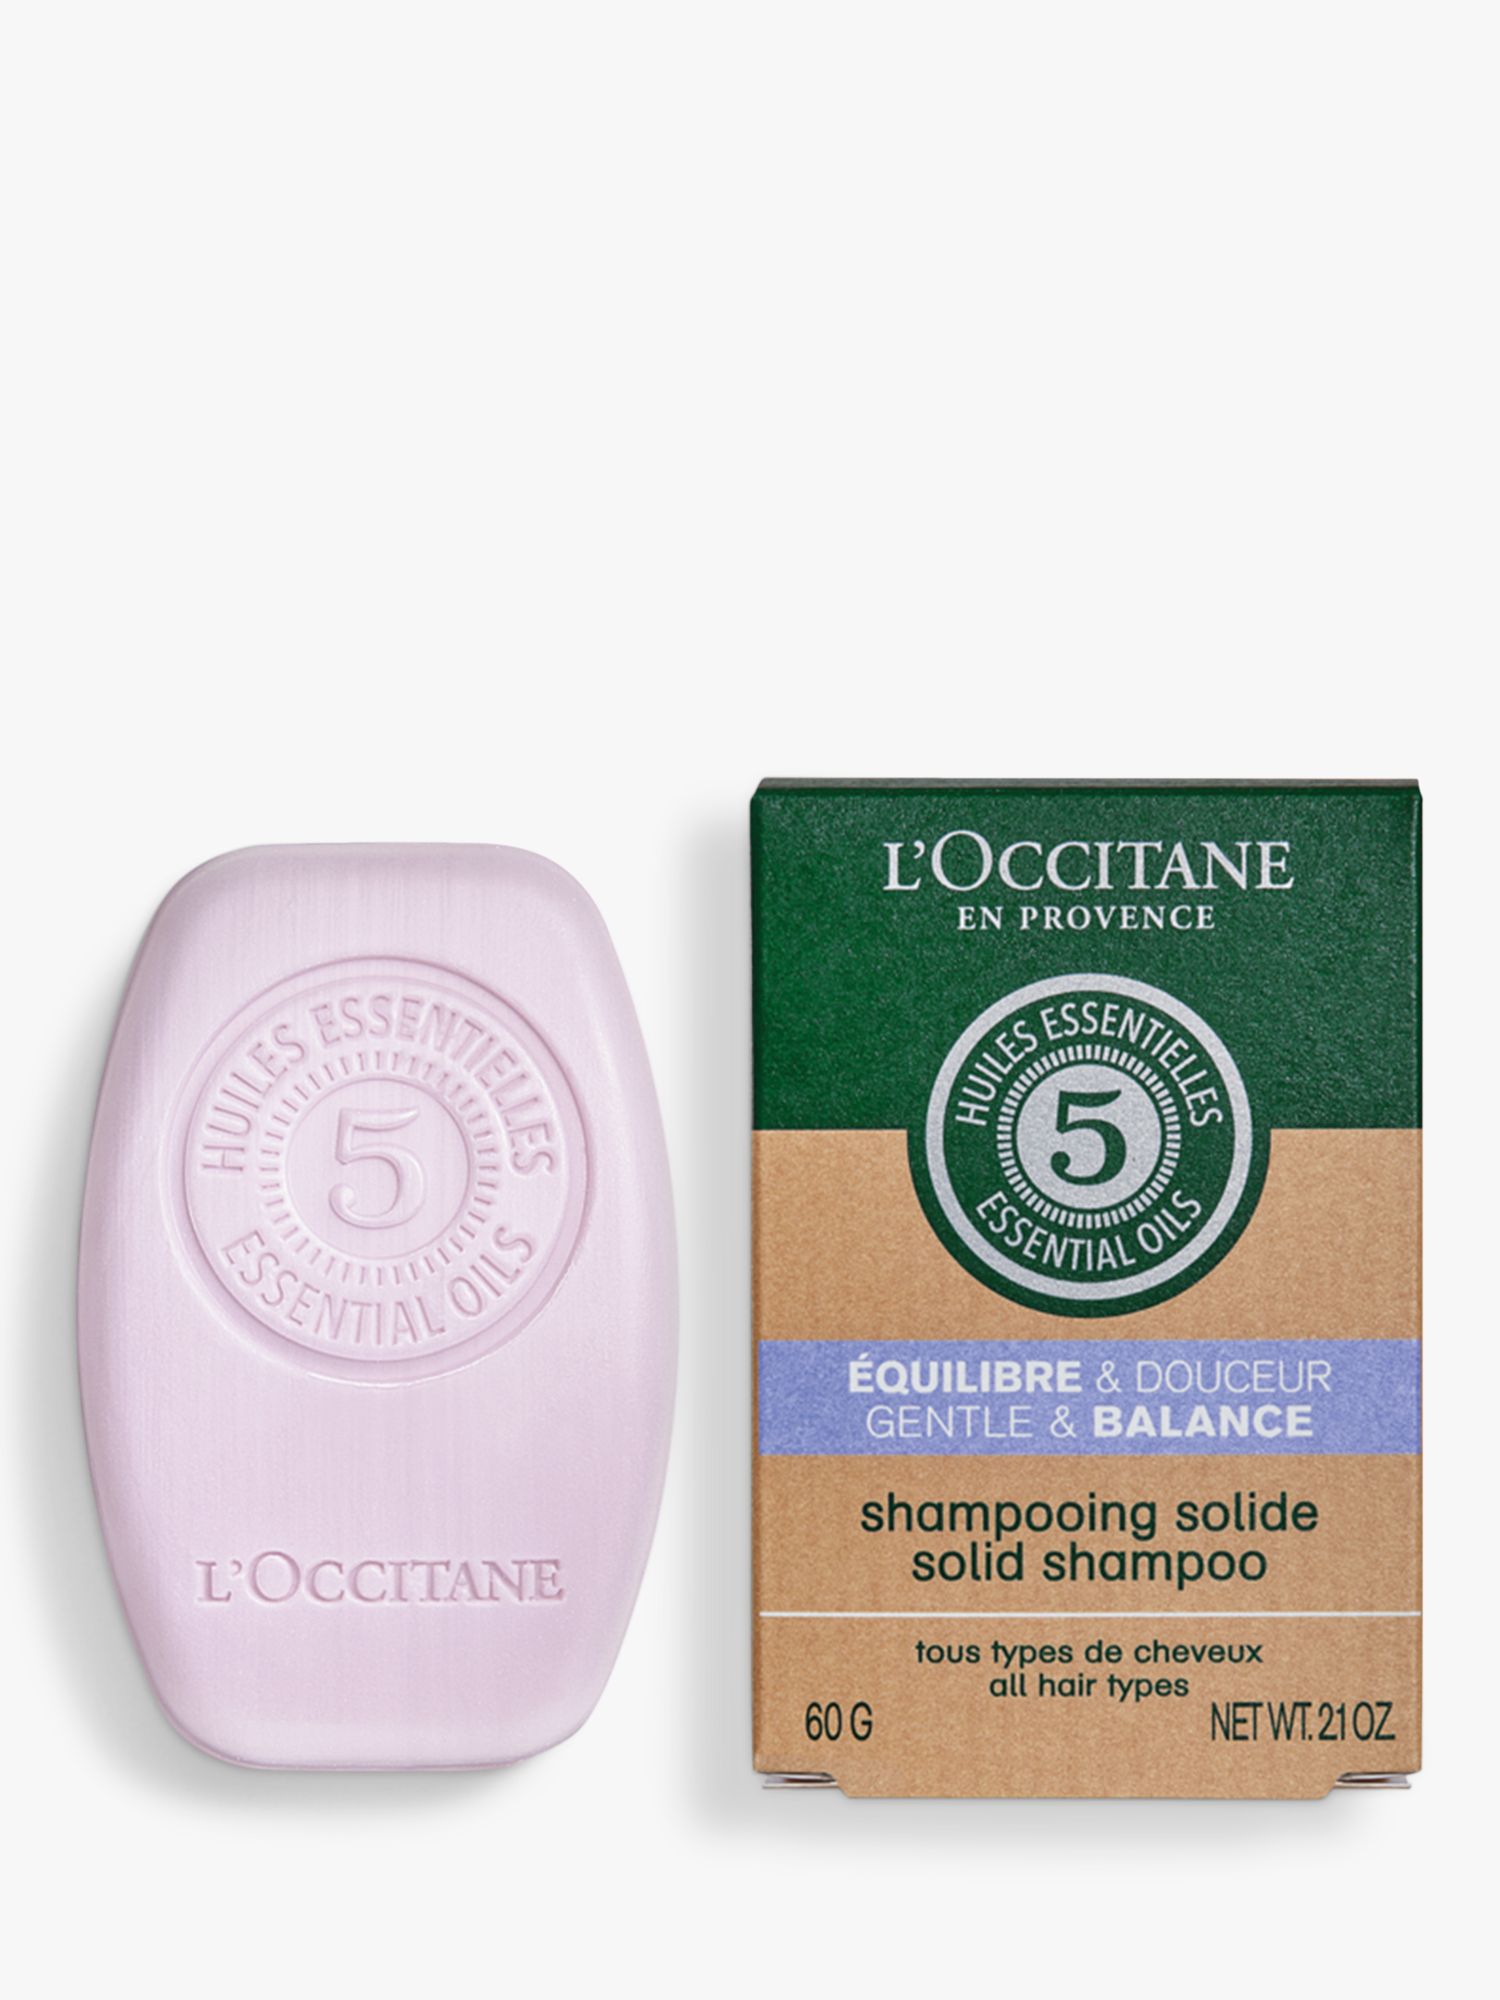 L'OCCITANE Gentle & Balance Solid Shampoo, 60g 1